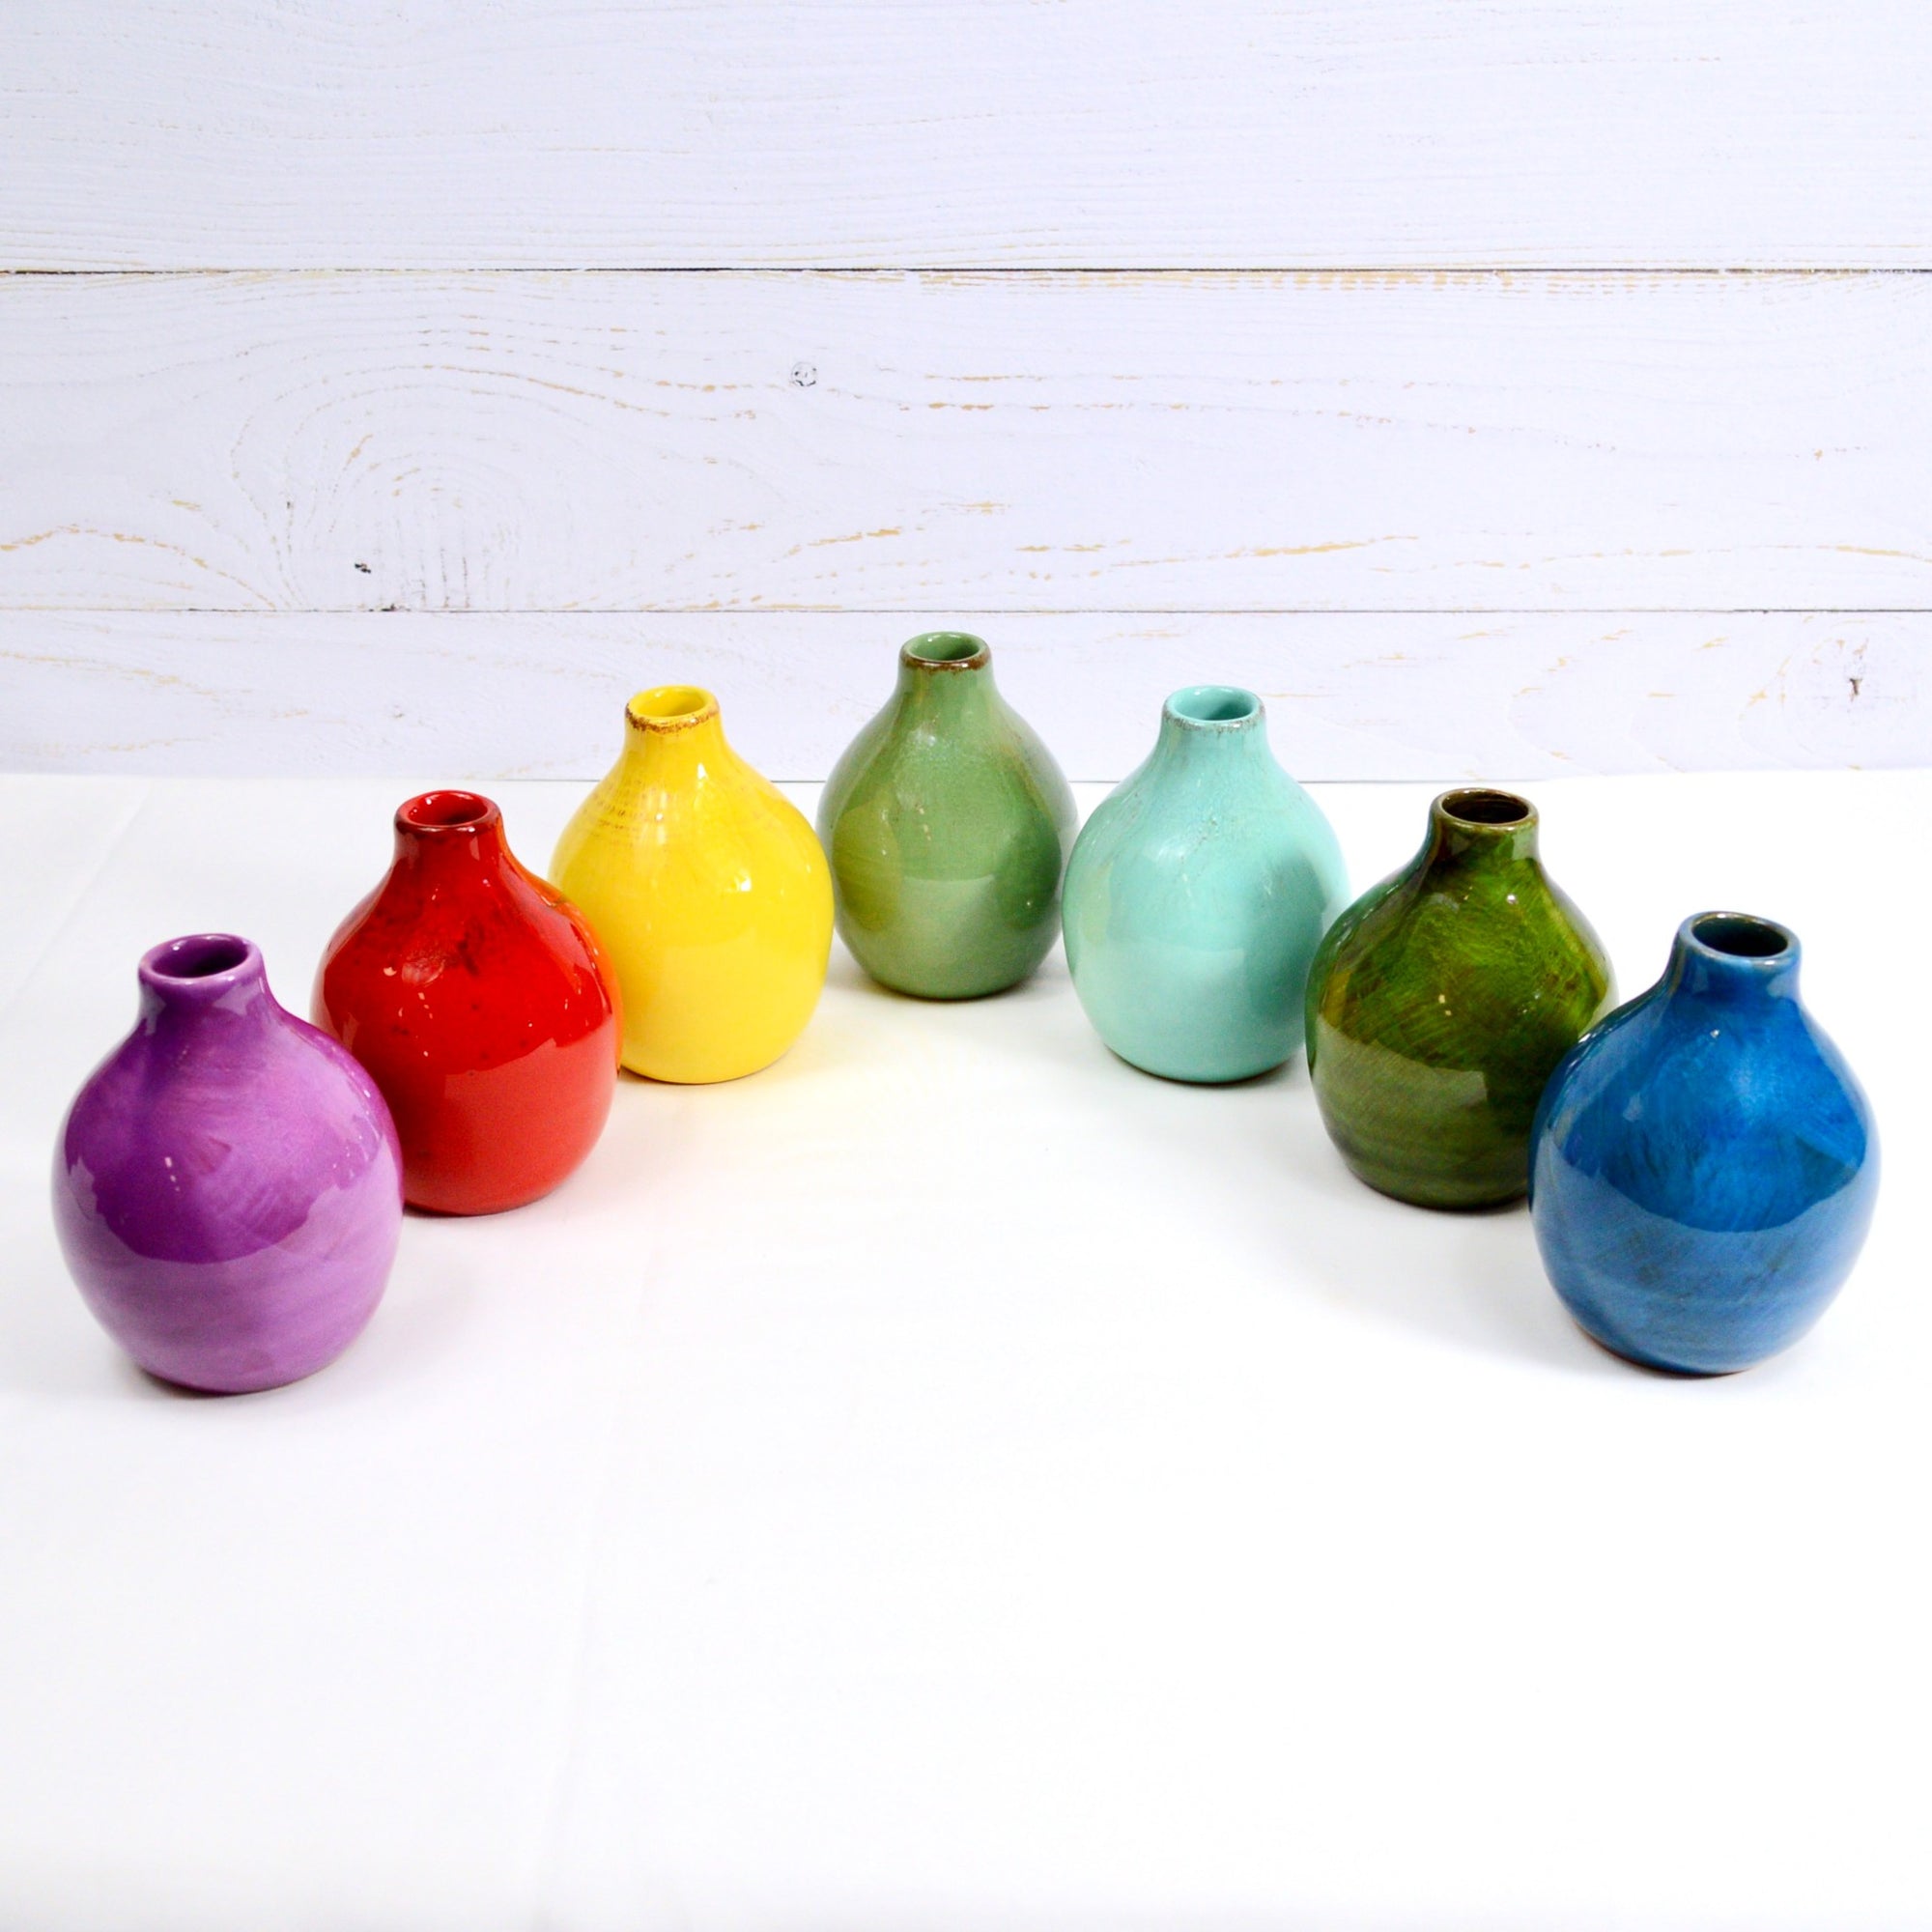 https://cdn.shopify.com/s/files/1/0597/3452/4084/files/tuscan-ceramic-vases-all-colors_2000x.jpg?v=1691450501